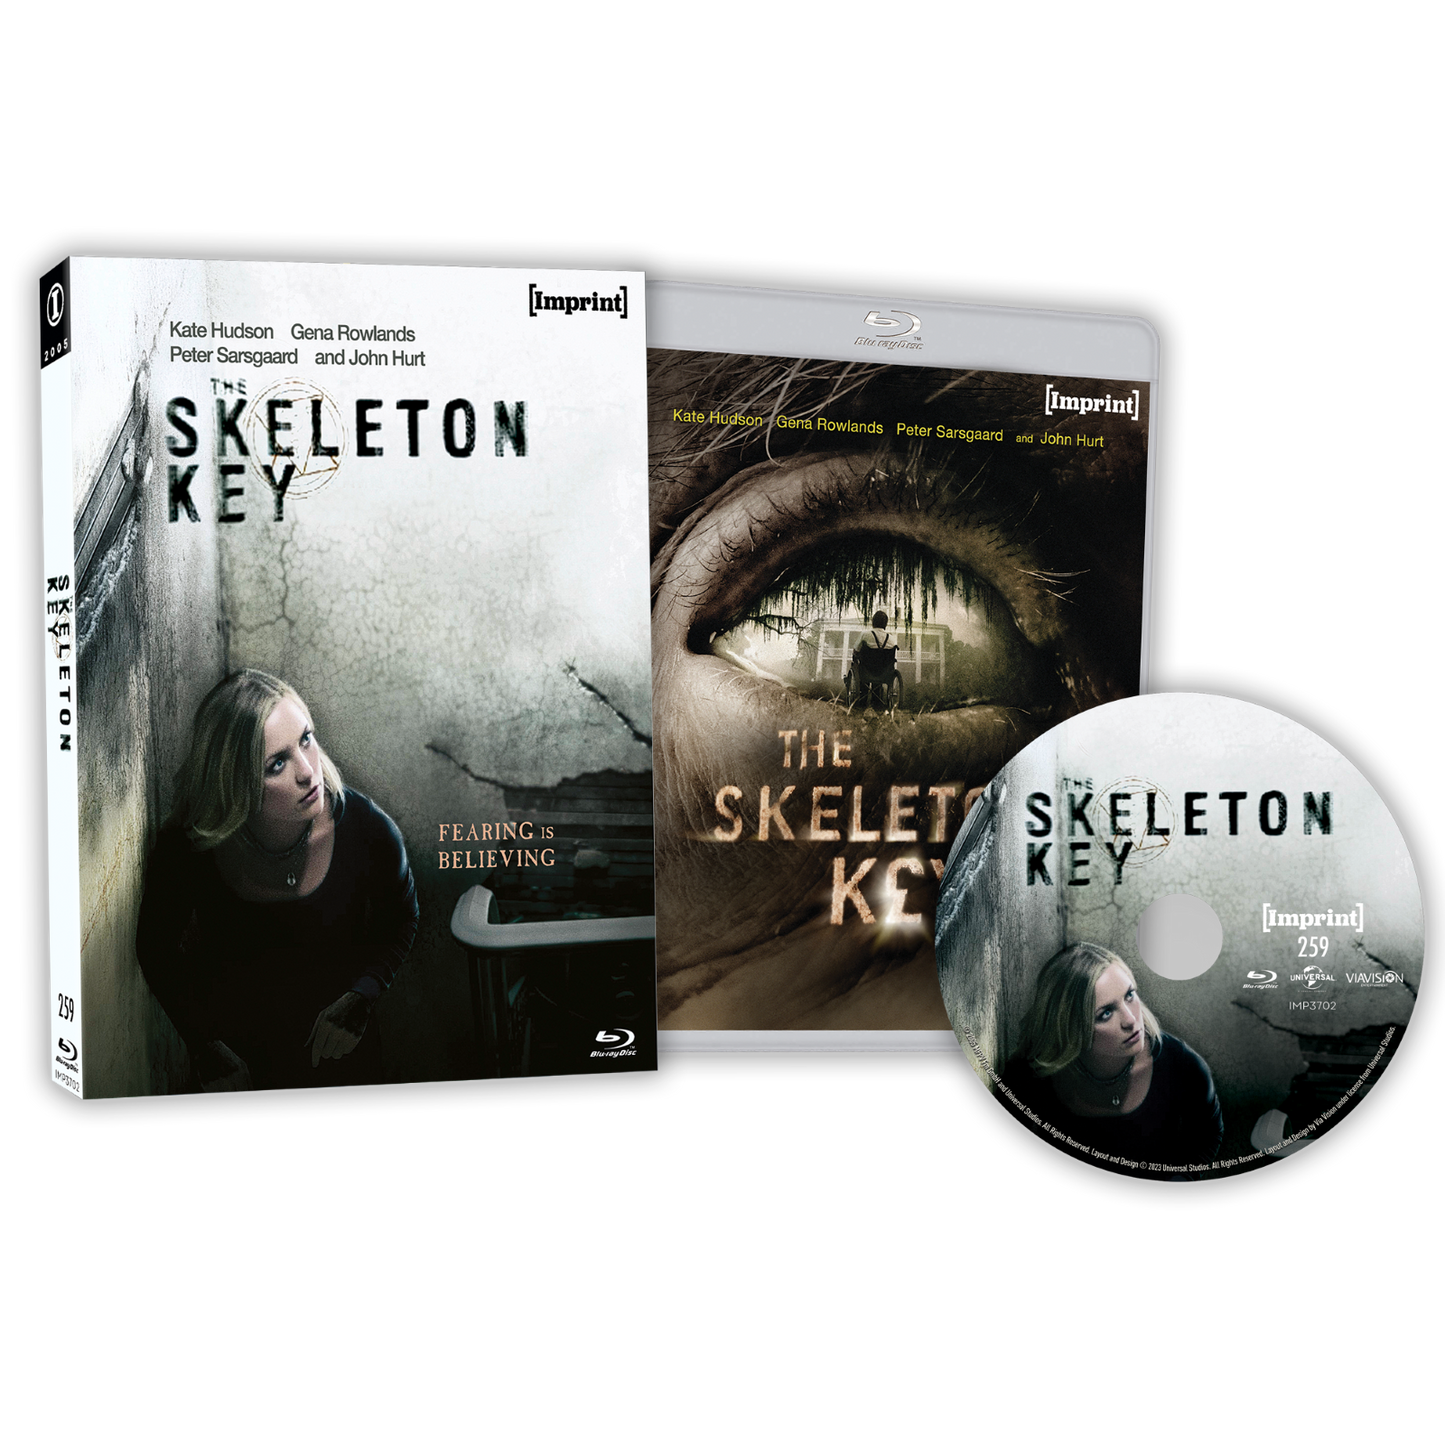 The Skeleton Key (2005) Blu-ray with Slipcase (Imprint/Region Free)